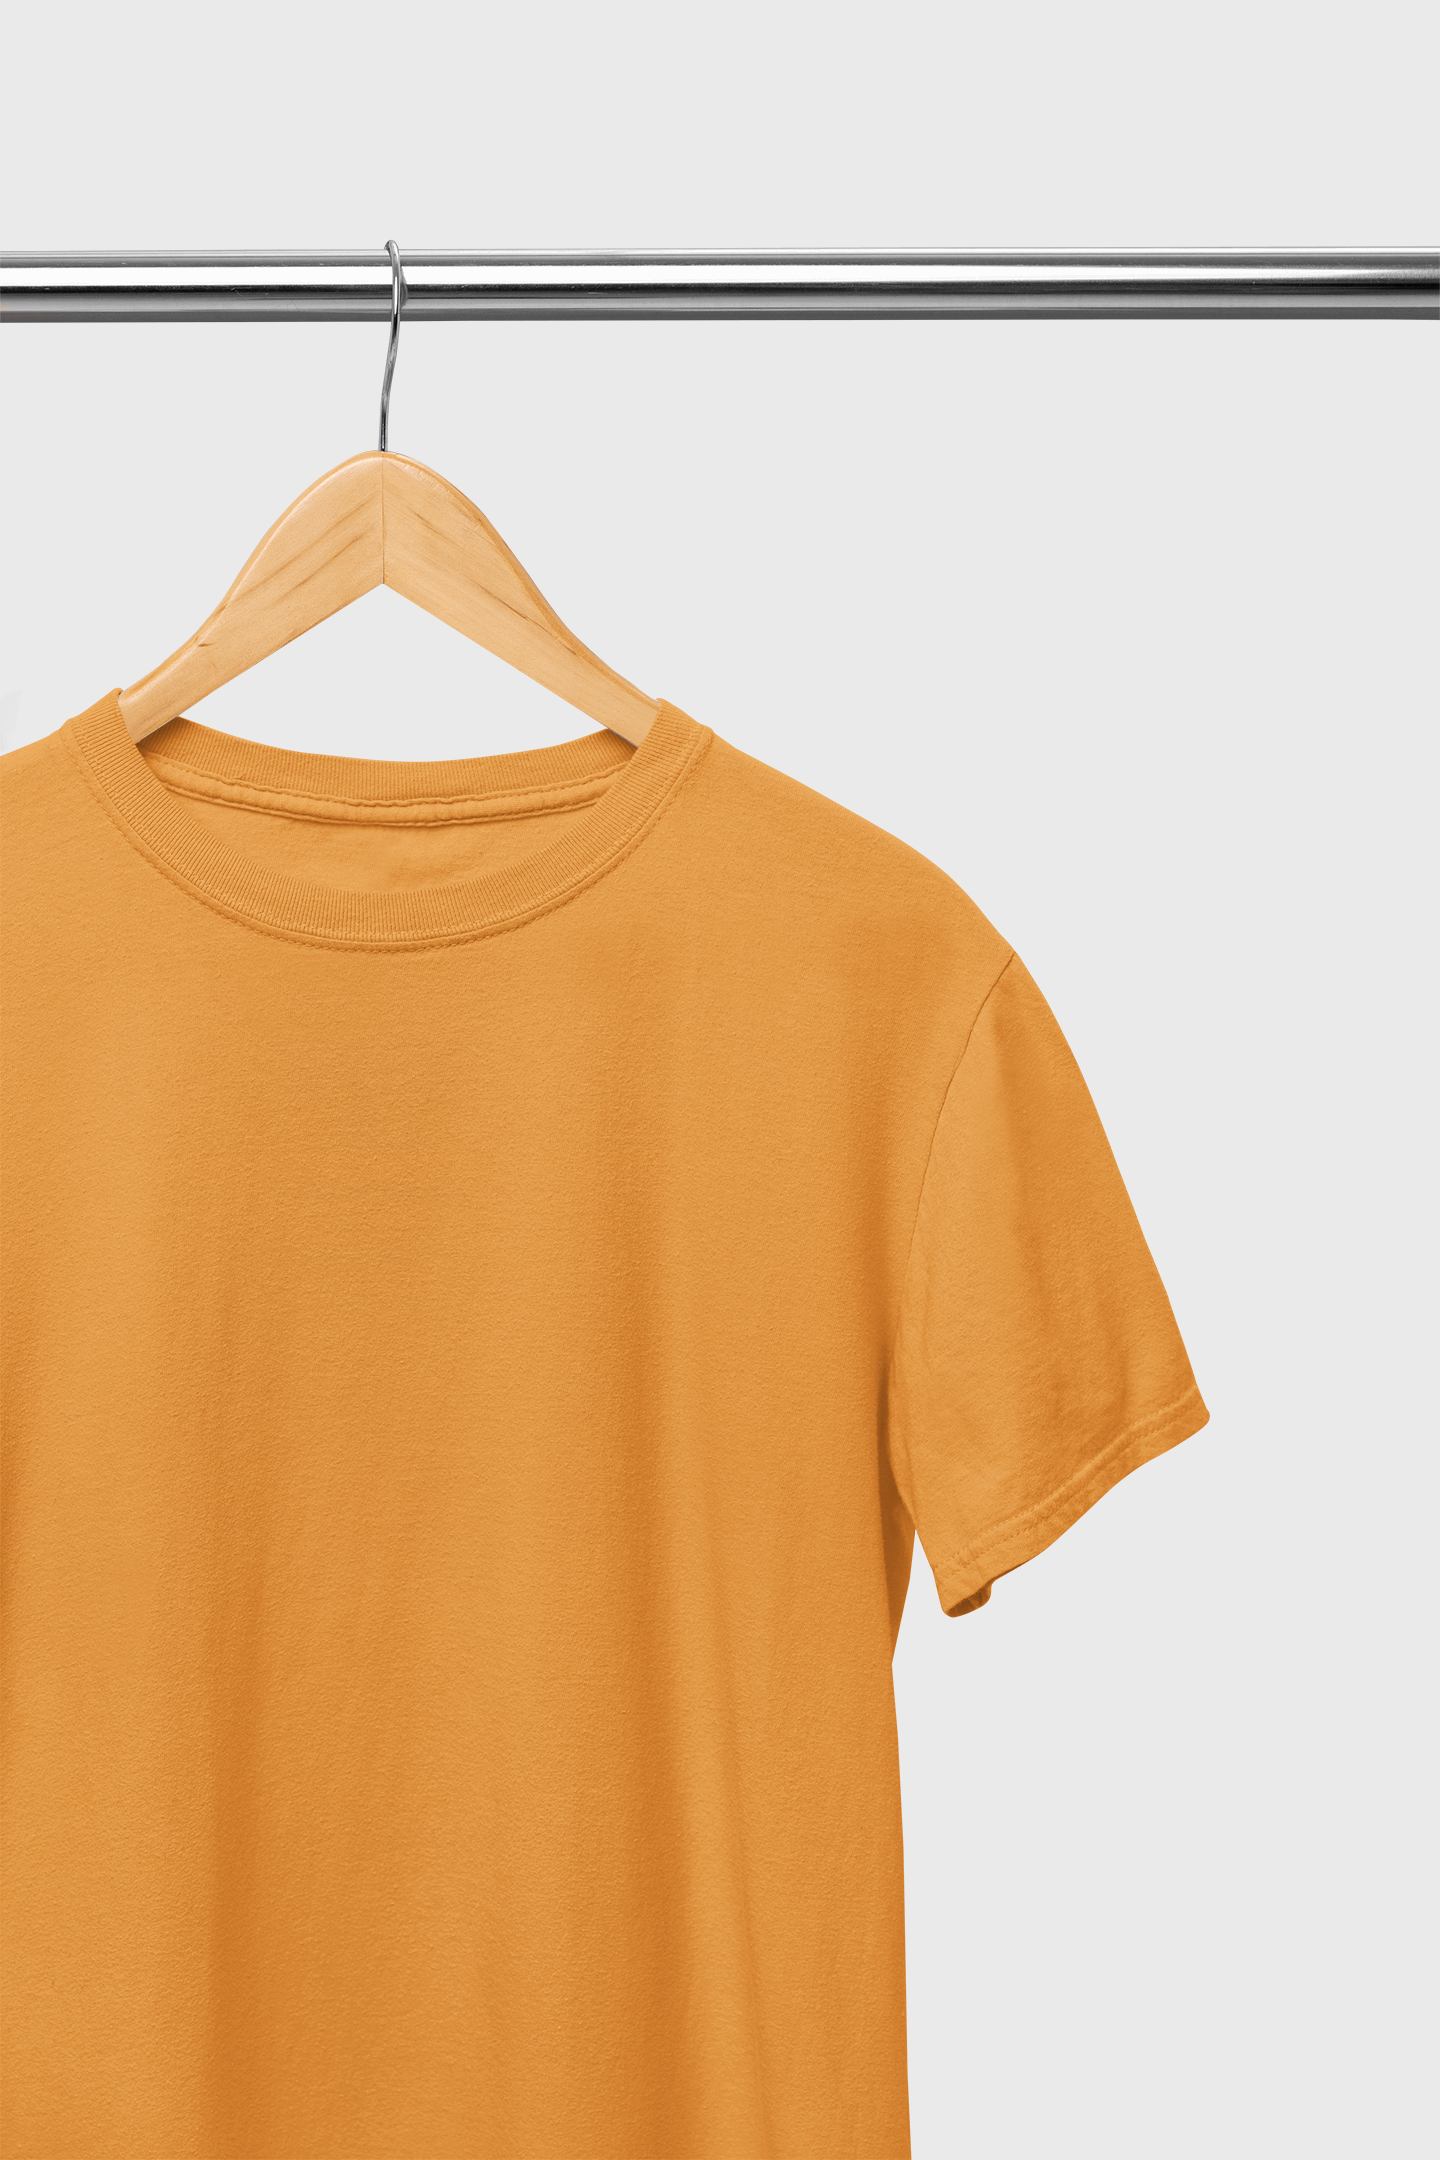 Golden Yellow Men's Pure Cotton Round Neck Plain T-Shirt (Regular Fit)